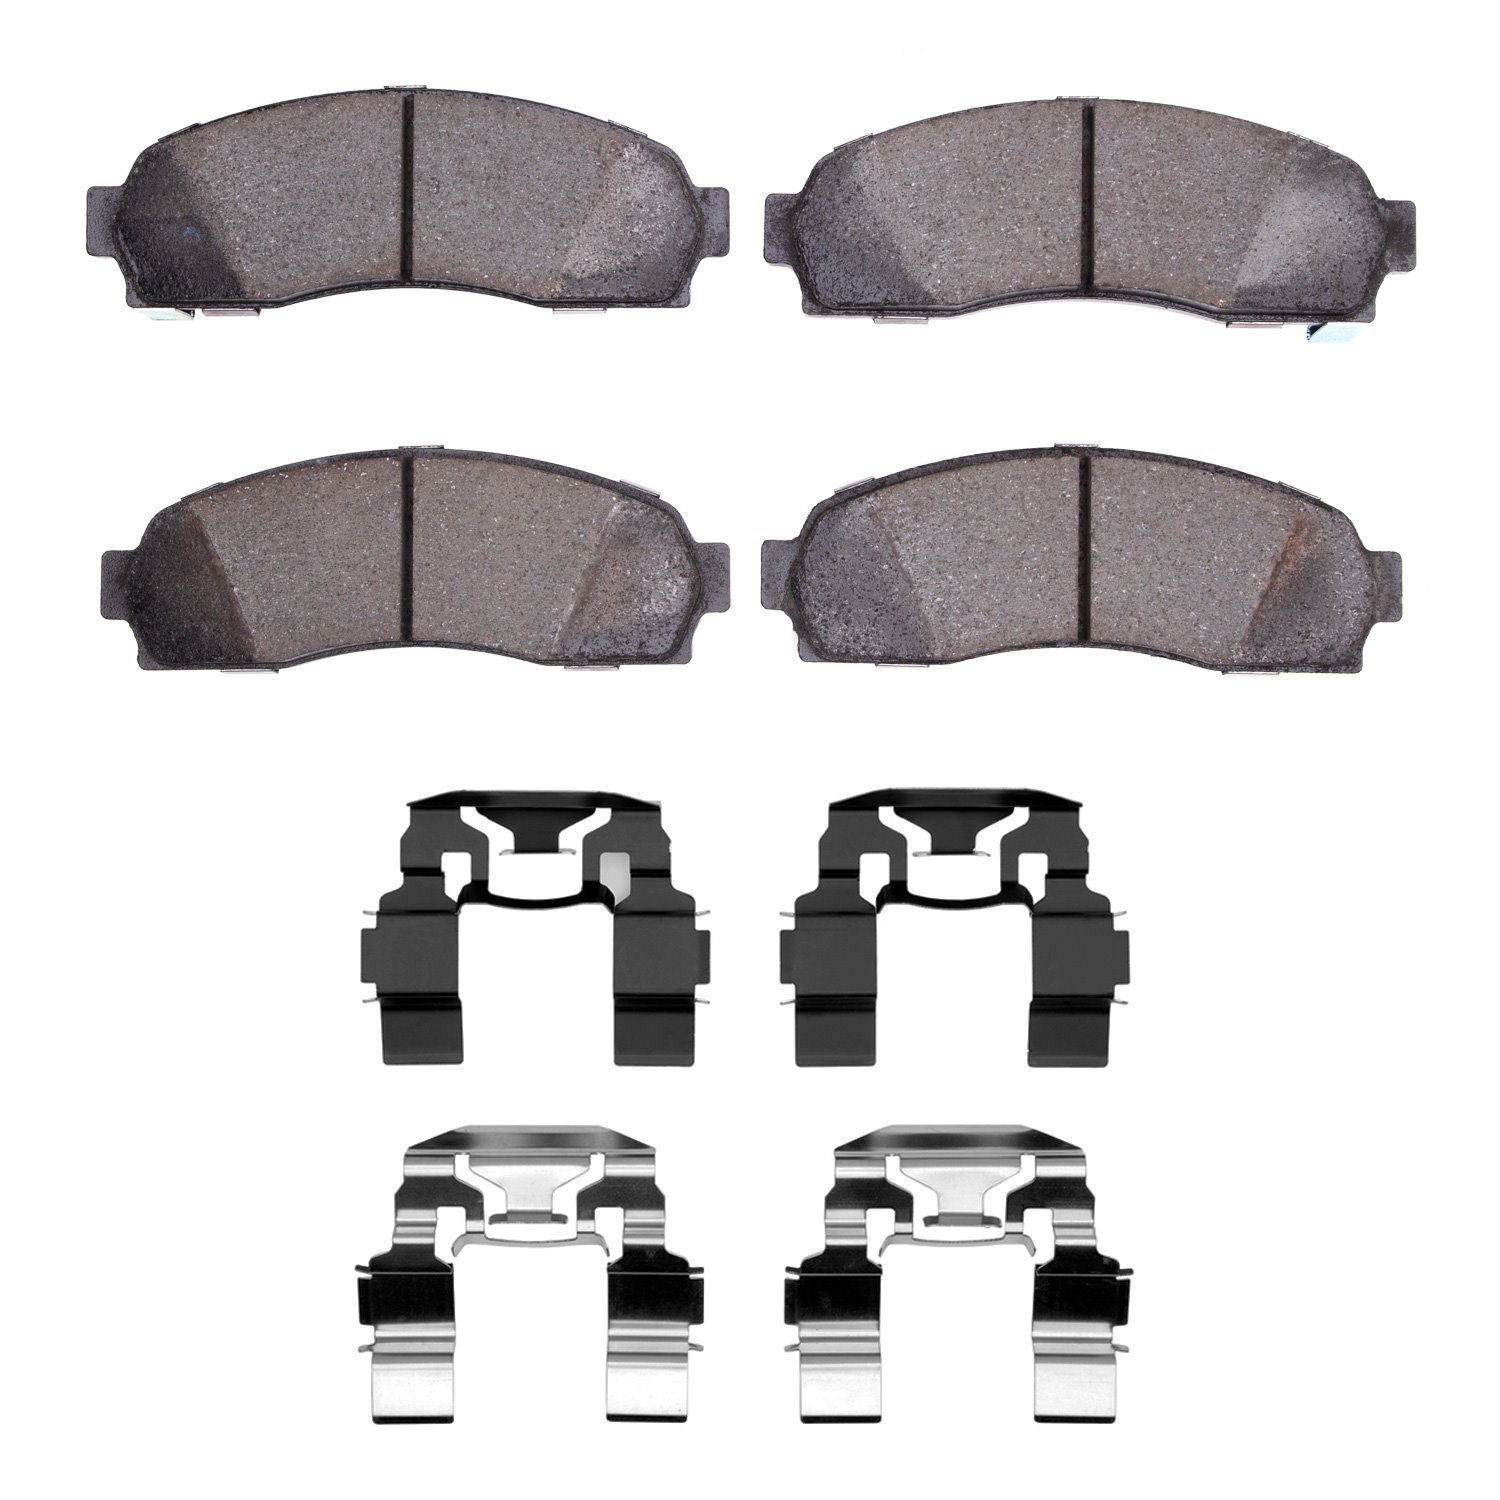 1310-0833-02 3000-Series Ceramic Brake Pads & Hardware Kit, 2001-2005 Ford/Lincoln/Mercury/Mazda, Position: Front